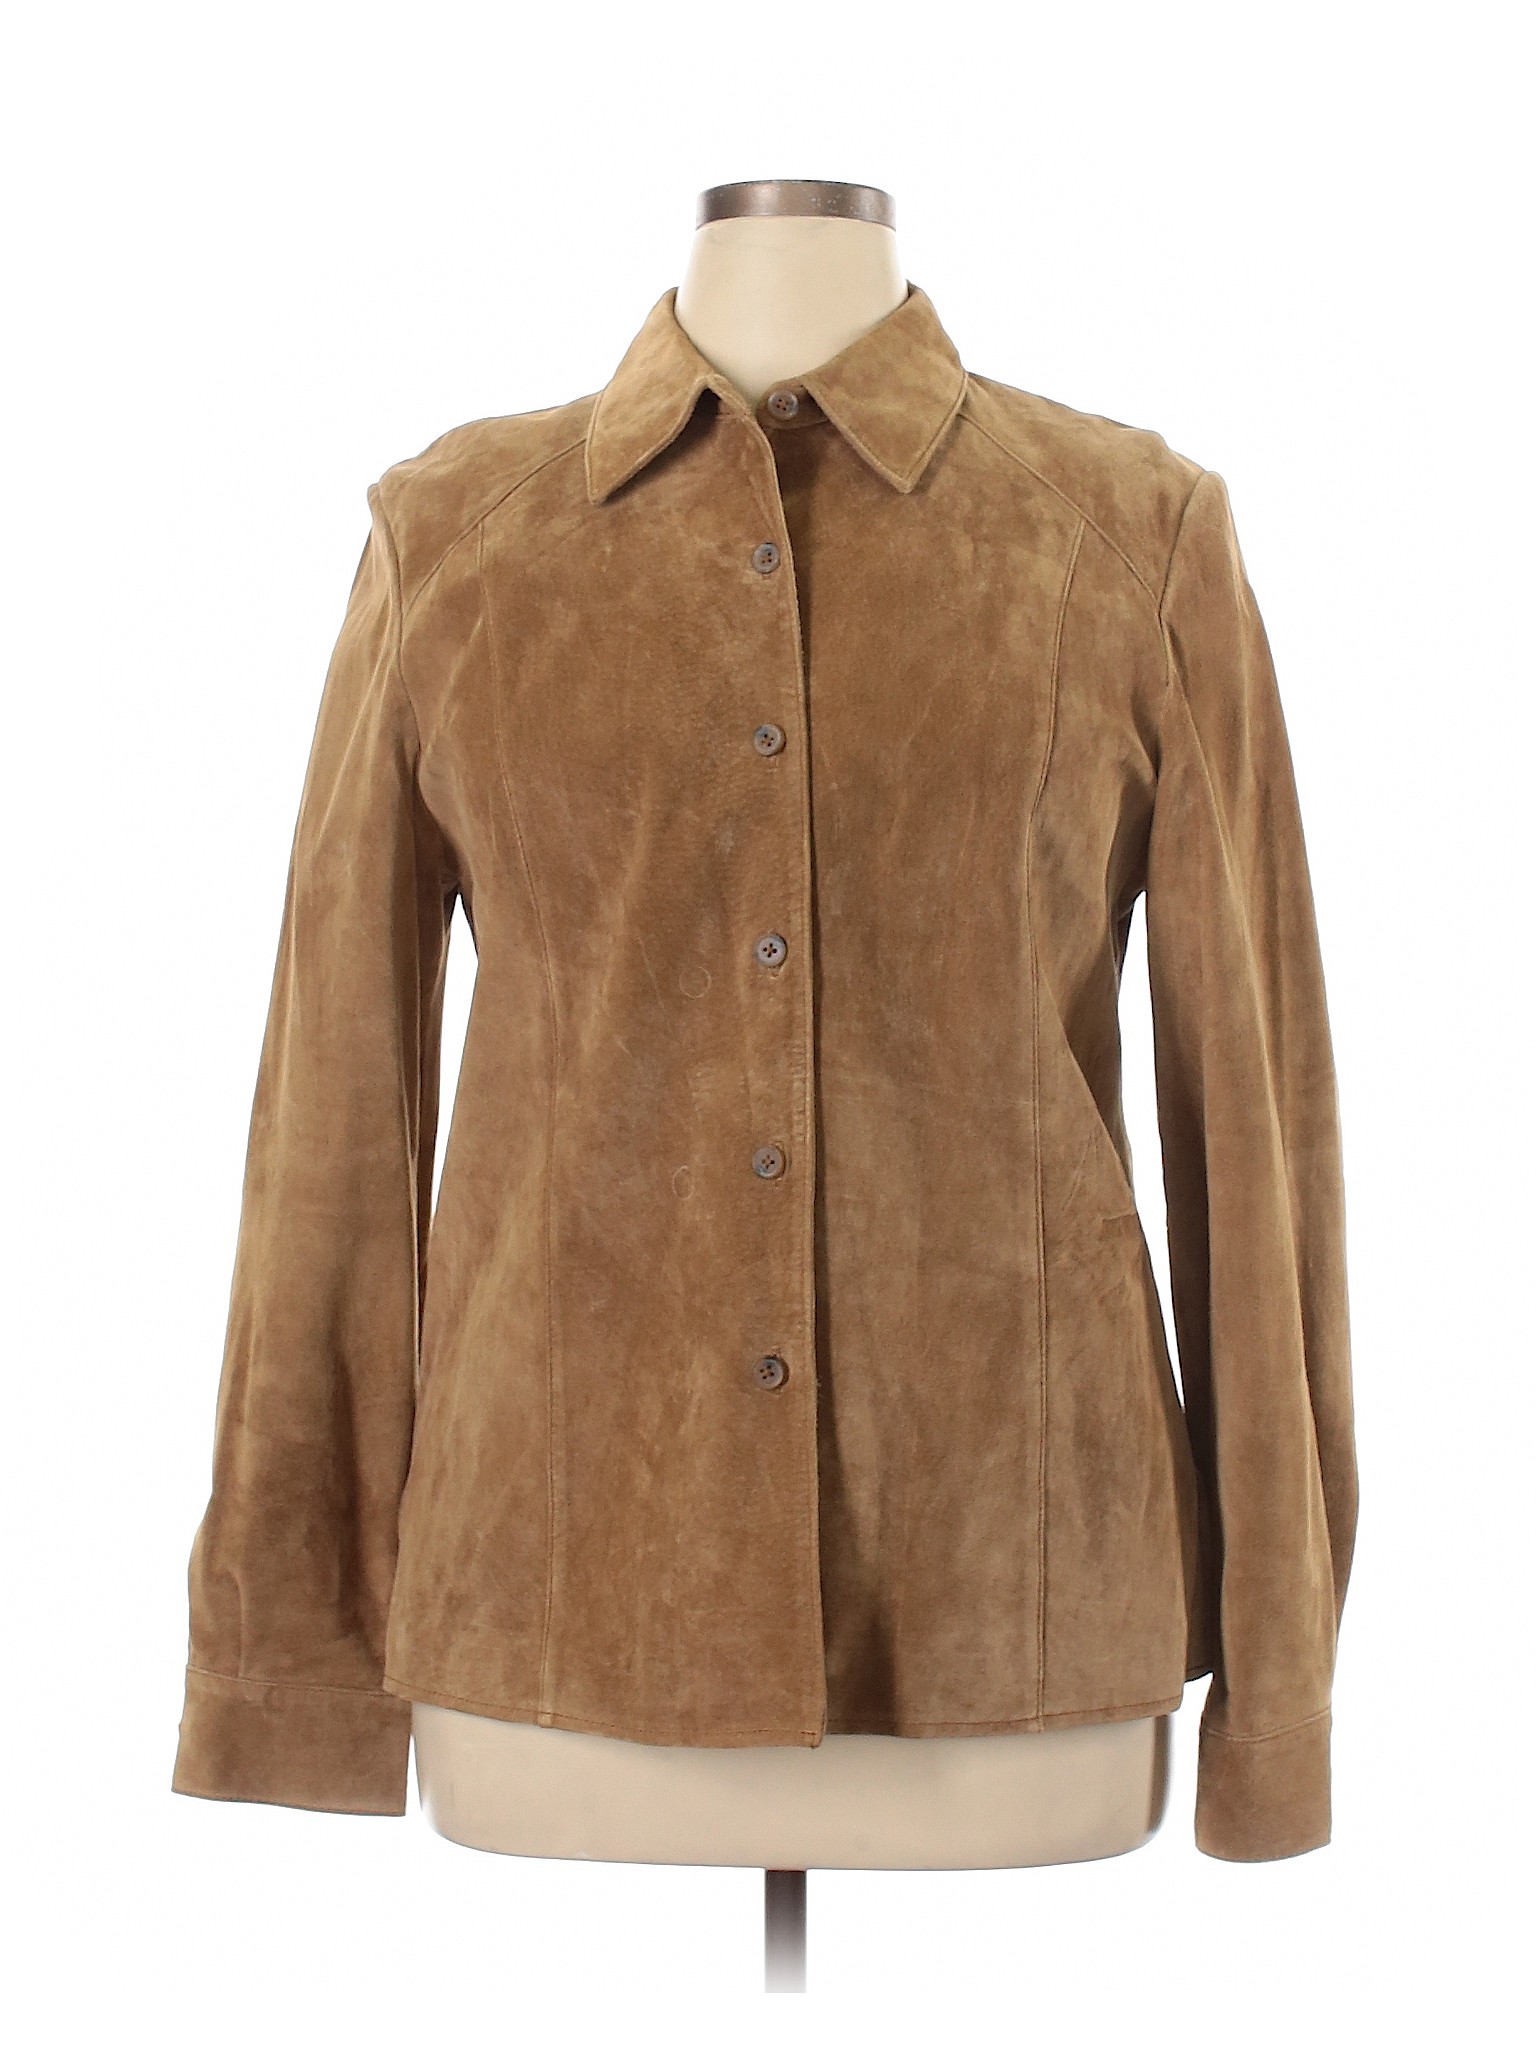 Alfani Women Brown Leather Jacket XL | eBay